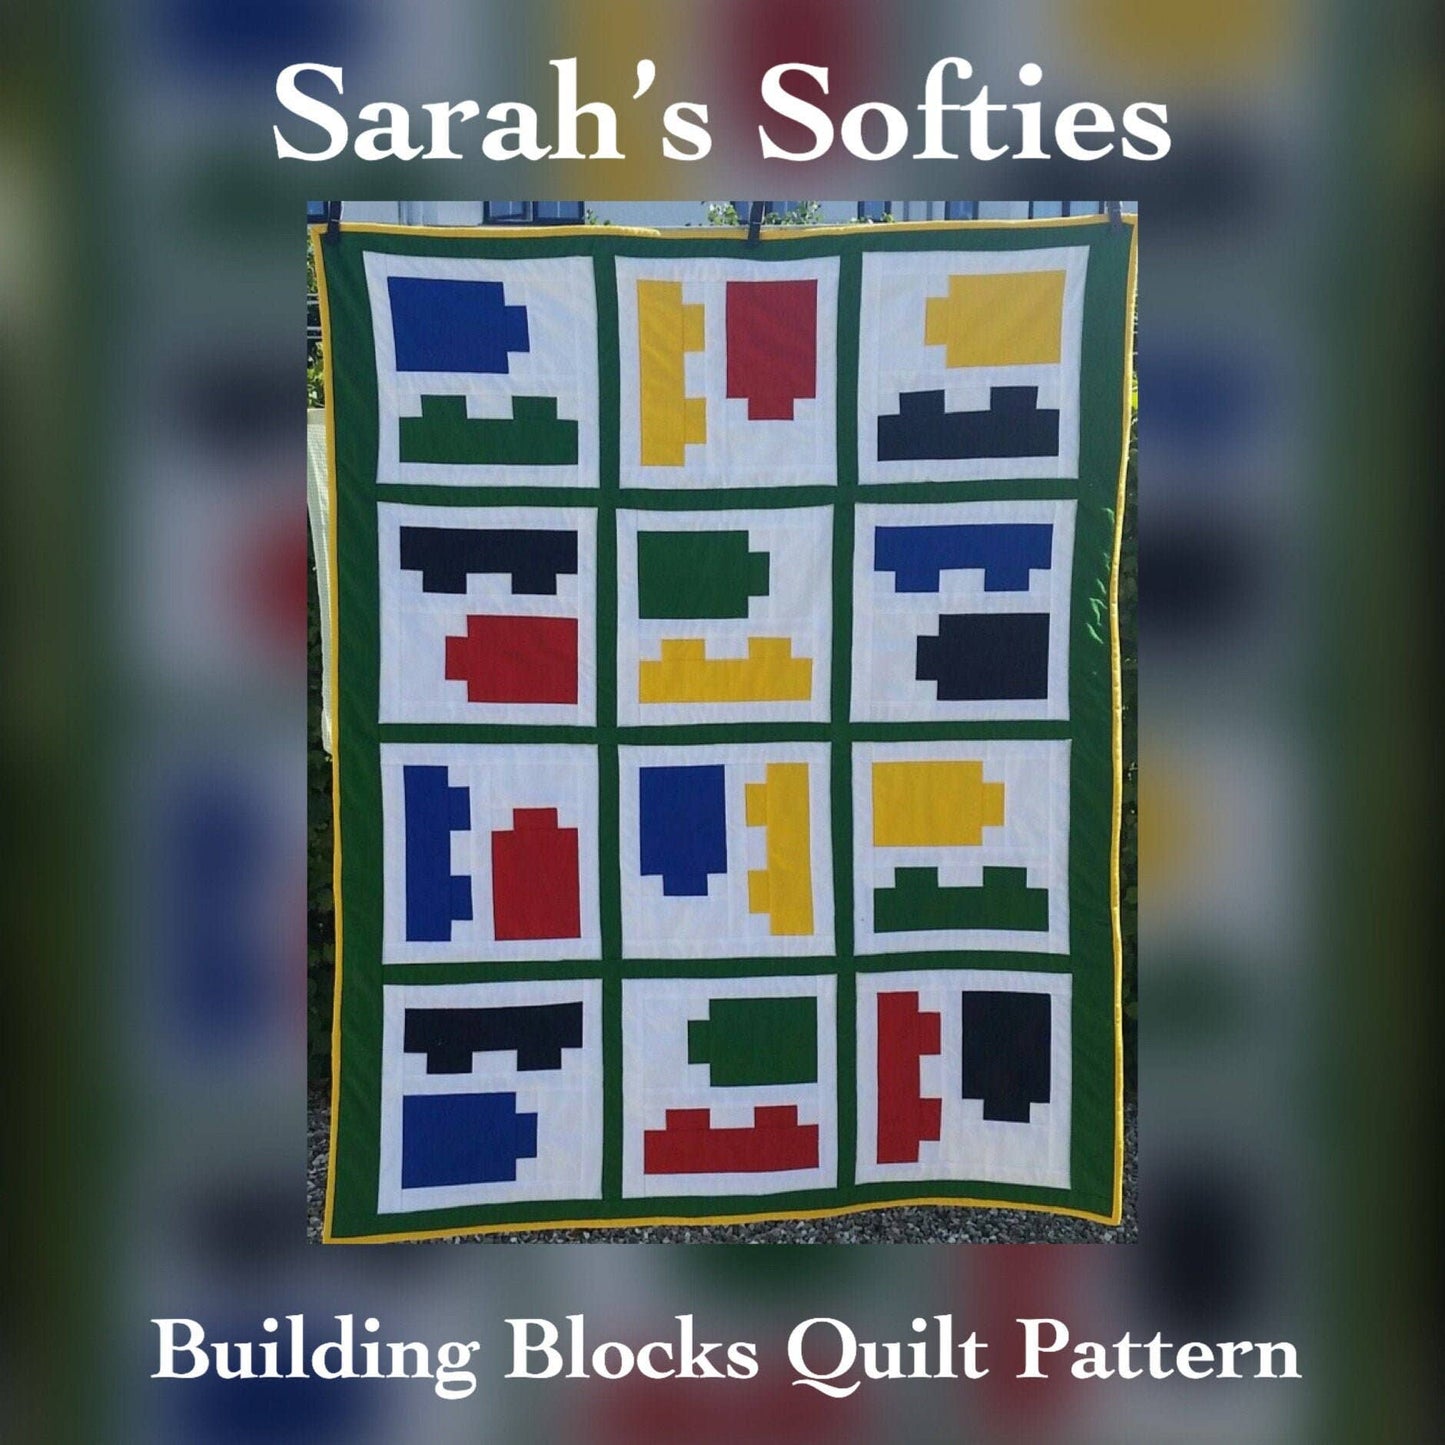 Building Blocks Quilt Pattern